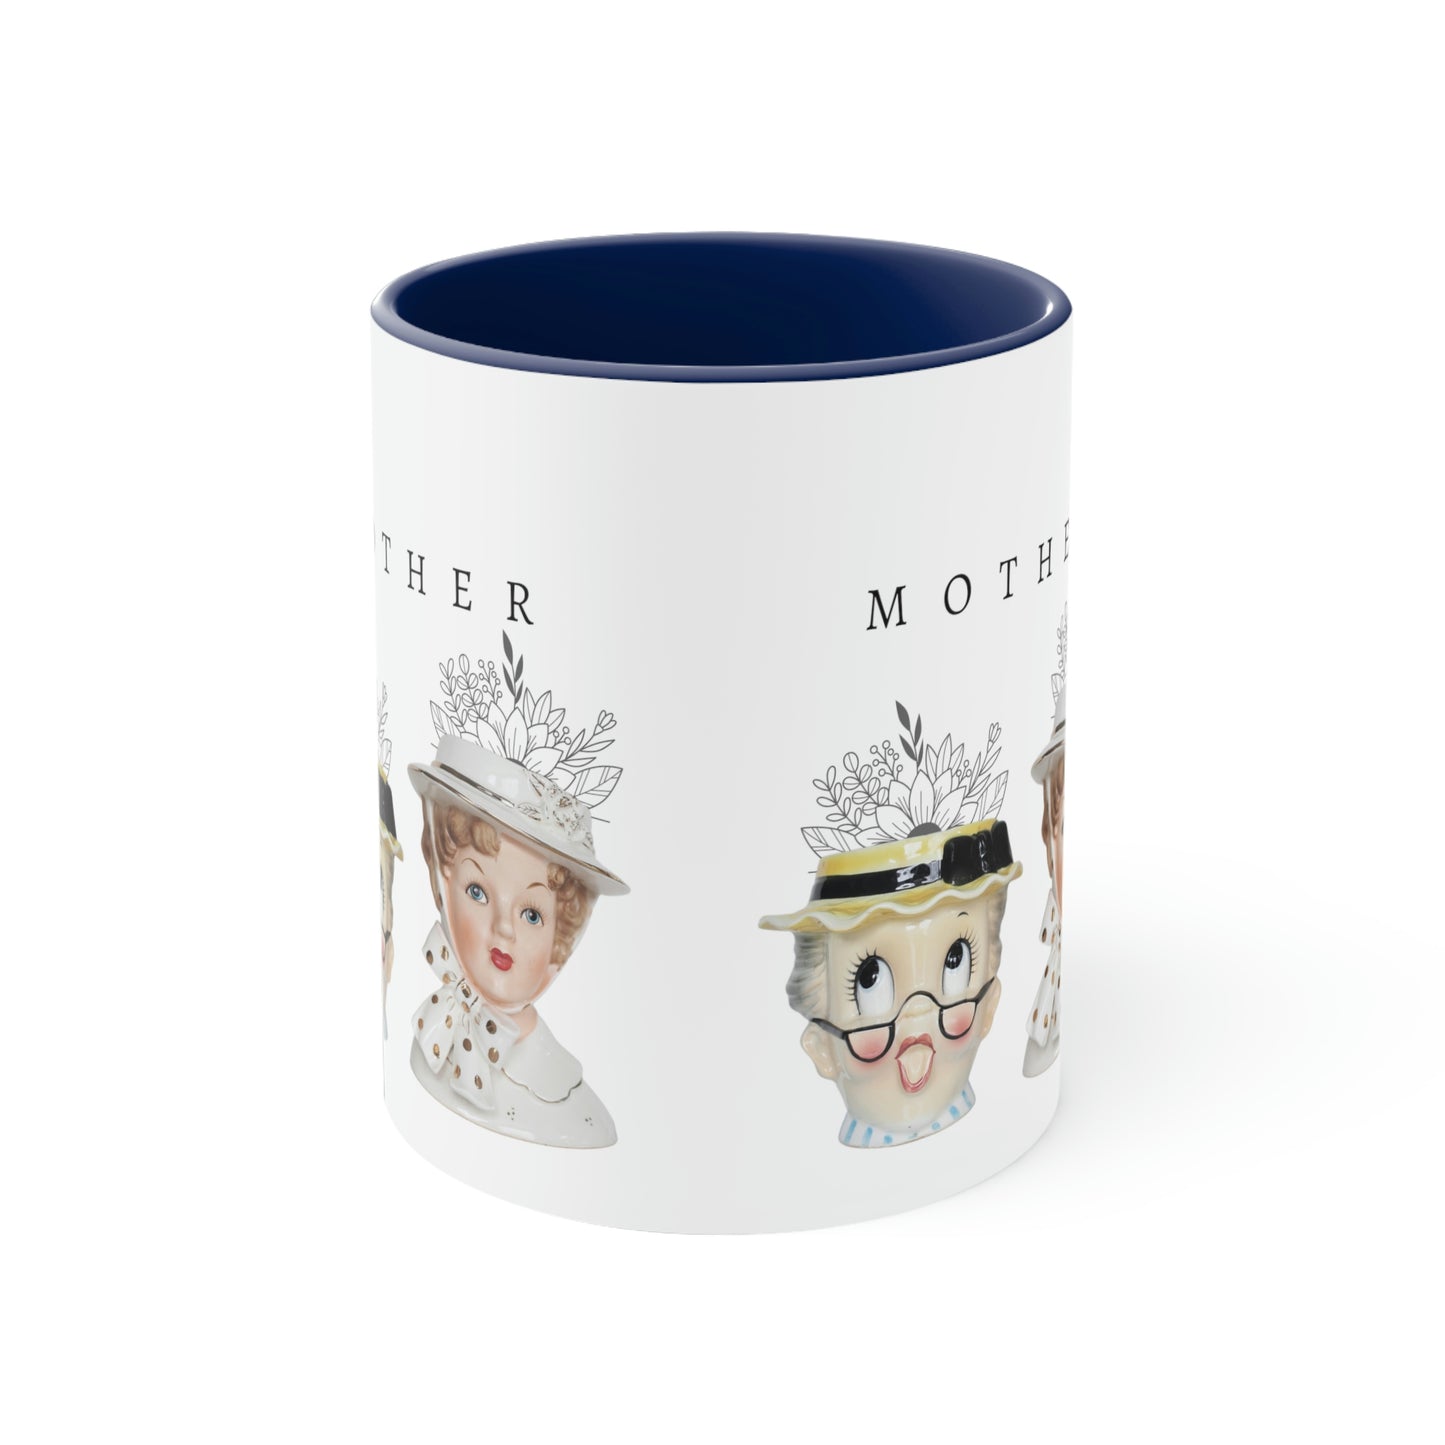 Head Vase - Lady Head Vase- Mother Coffee Cup-Accent Coffee Mug, 11oz